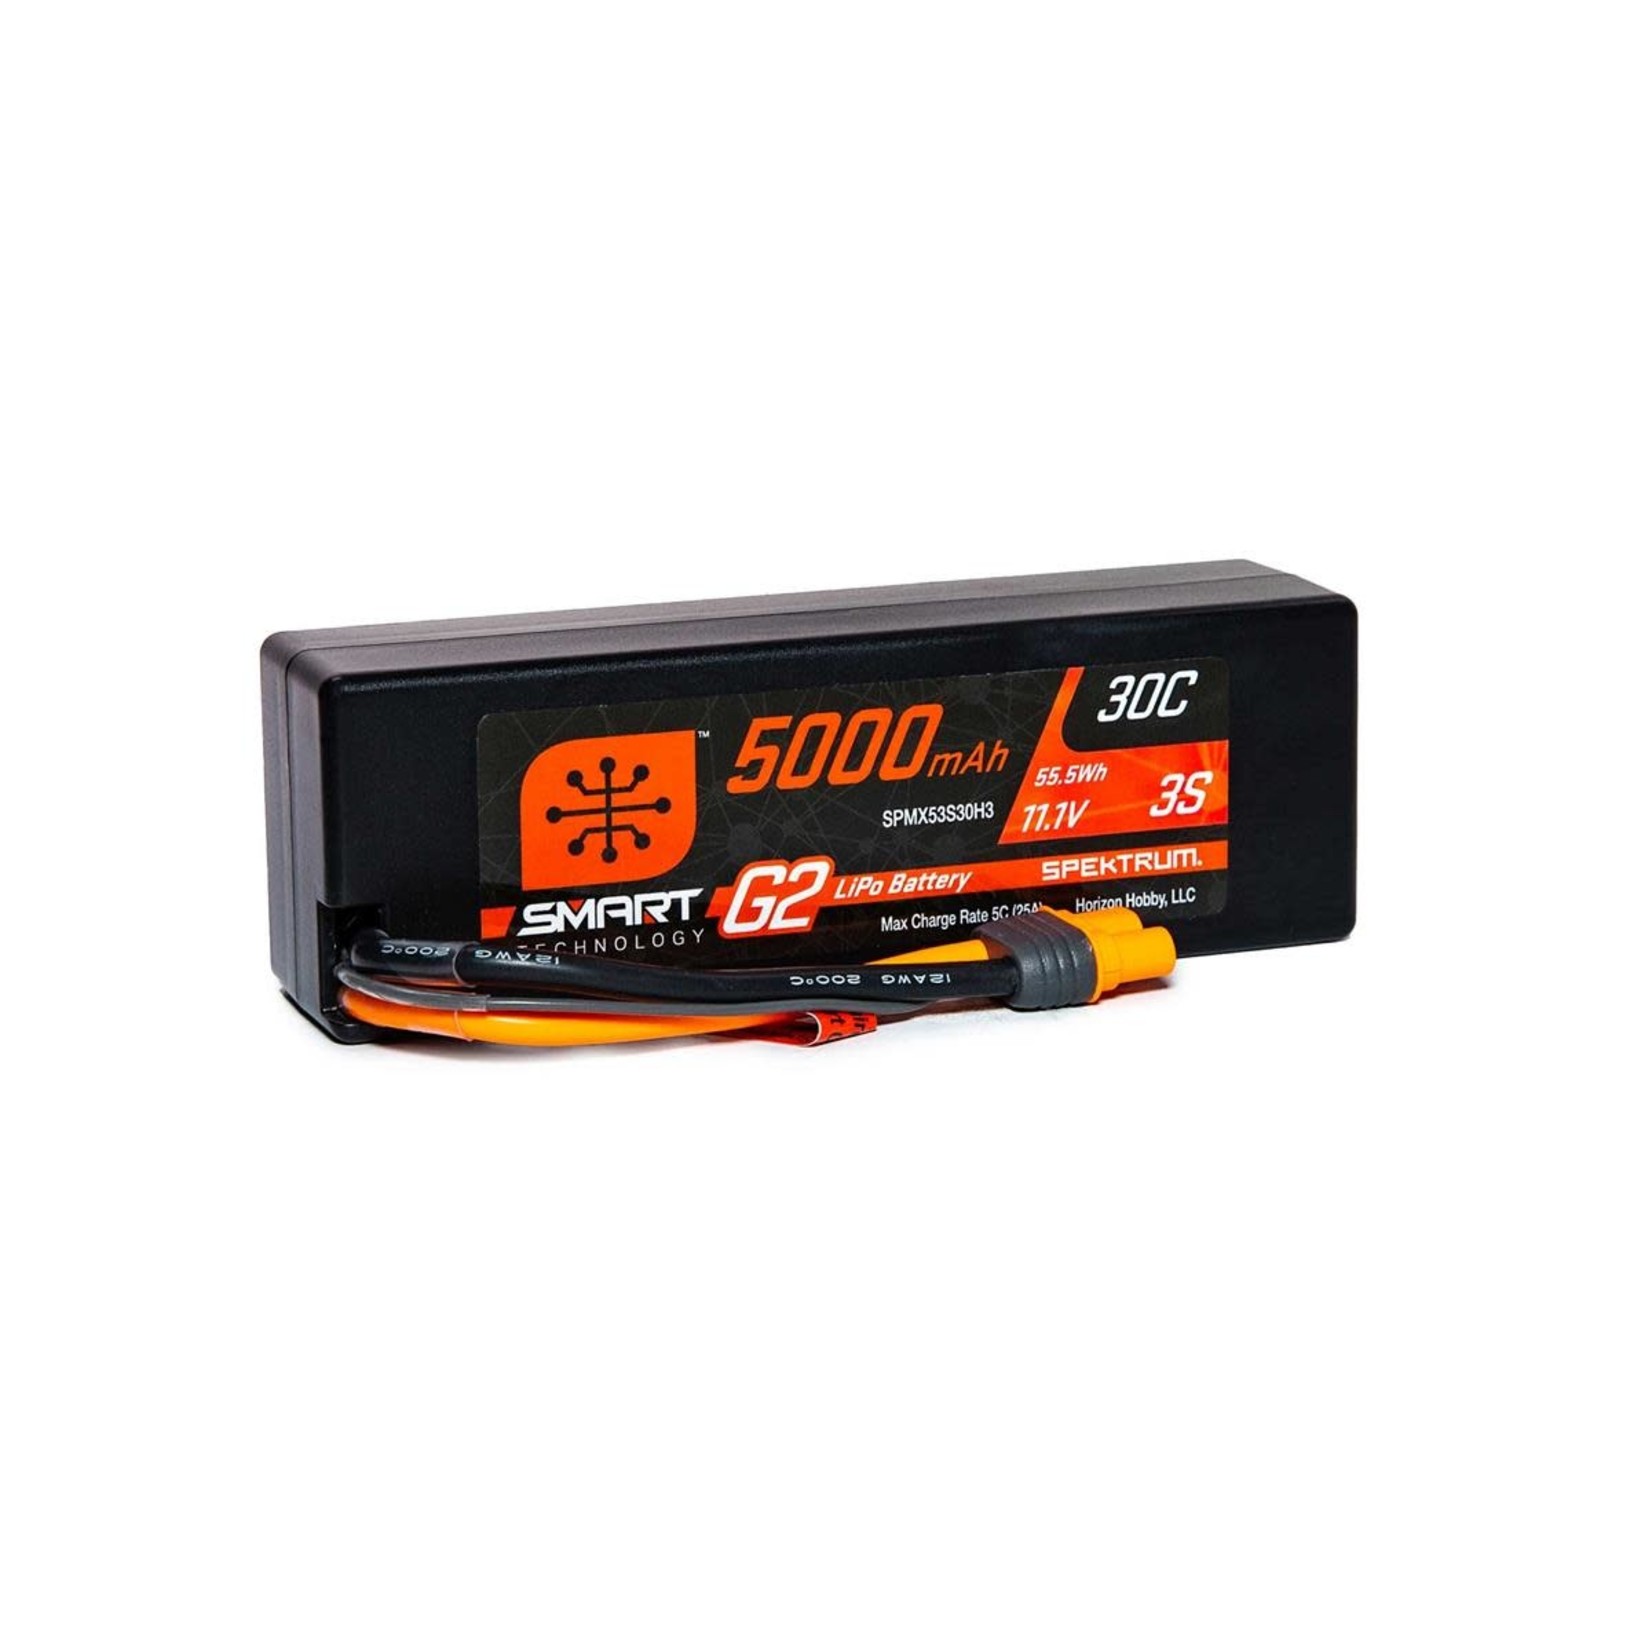 Spektrum Spektrum RC 3S Smart G2 LiPo 30C Battery Pack w/IC3 Connector (11.1V/5000mAh) #SPMX53S30H3